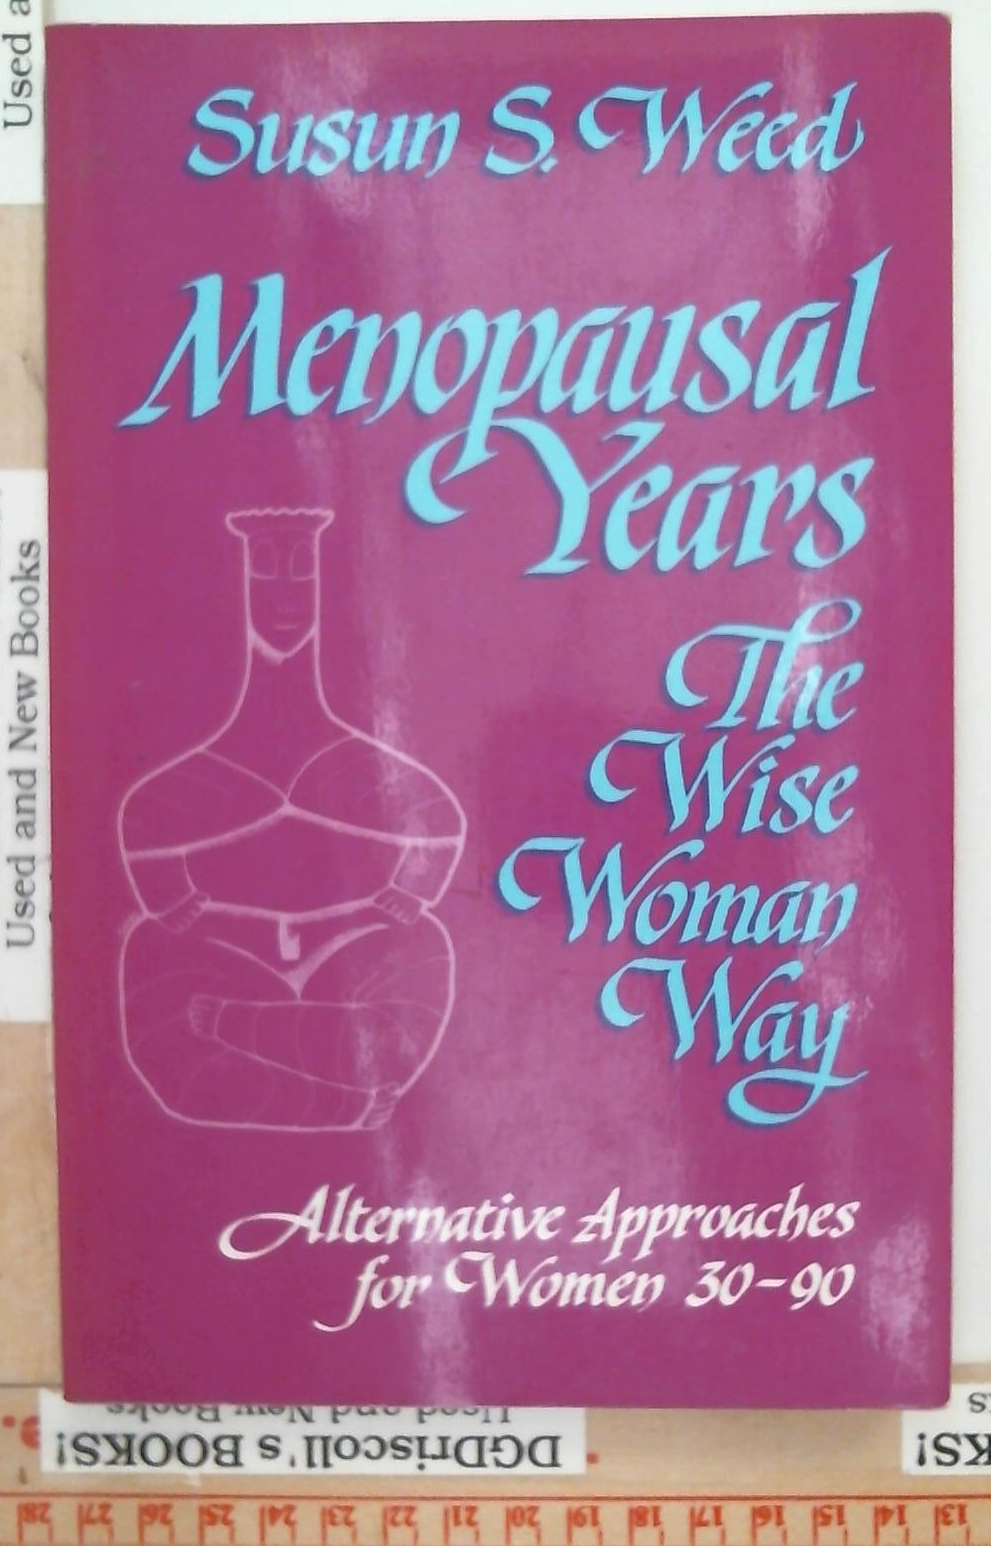 Menopausal Years the Wise Woman Way